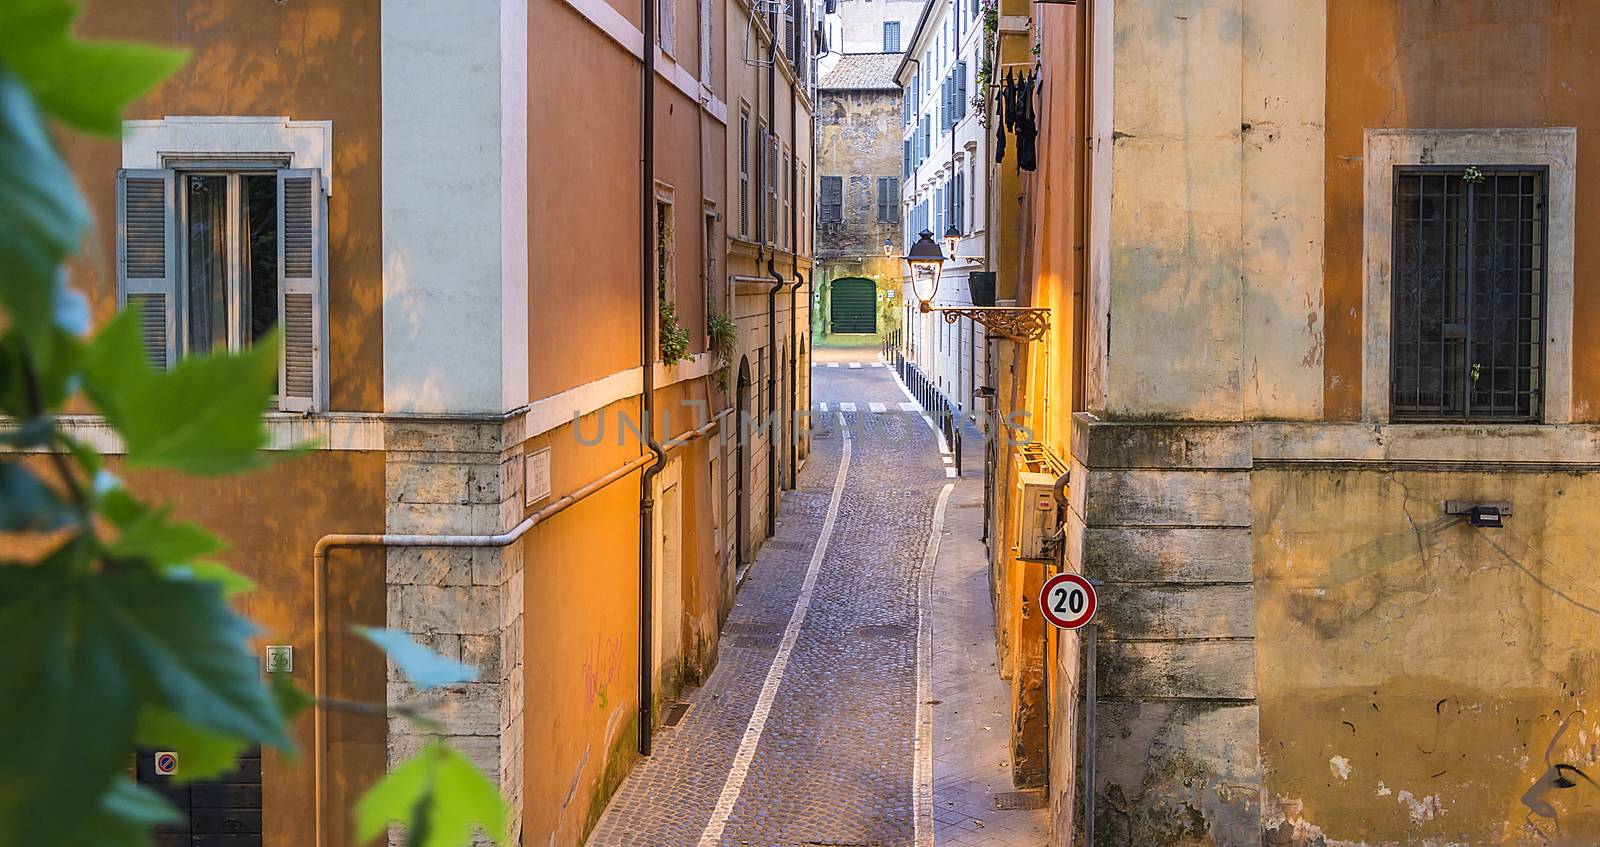 Medieval street in Rome by rarrarorro